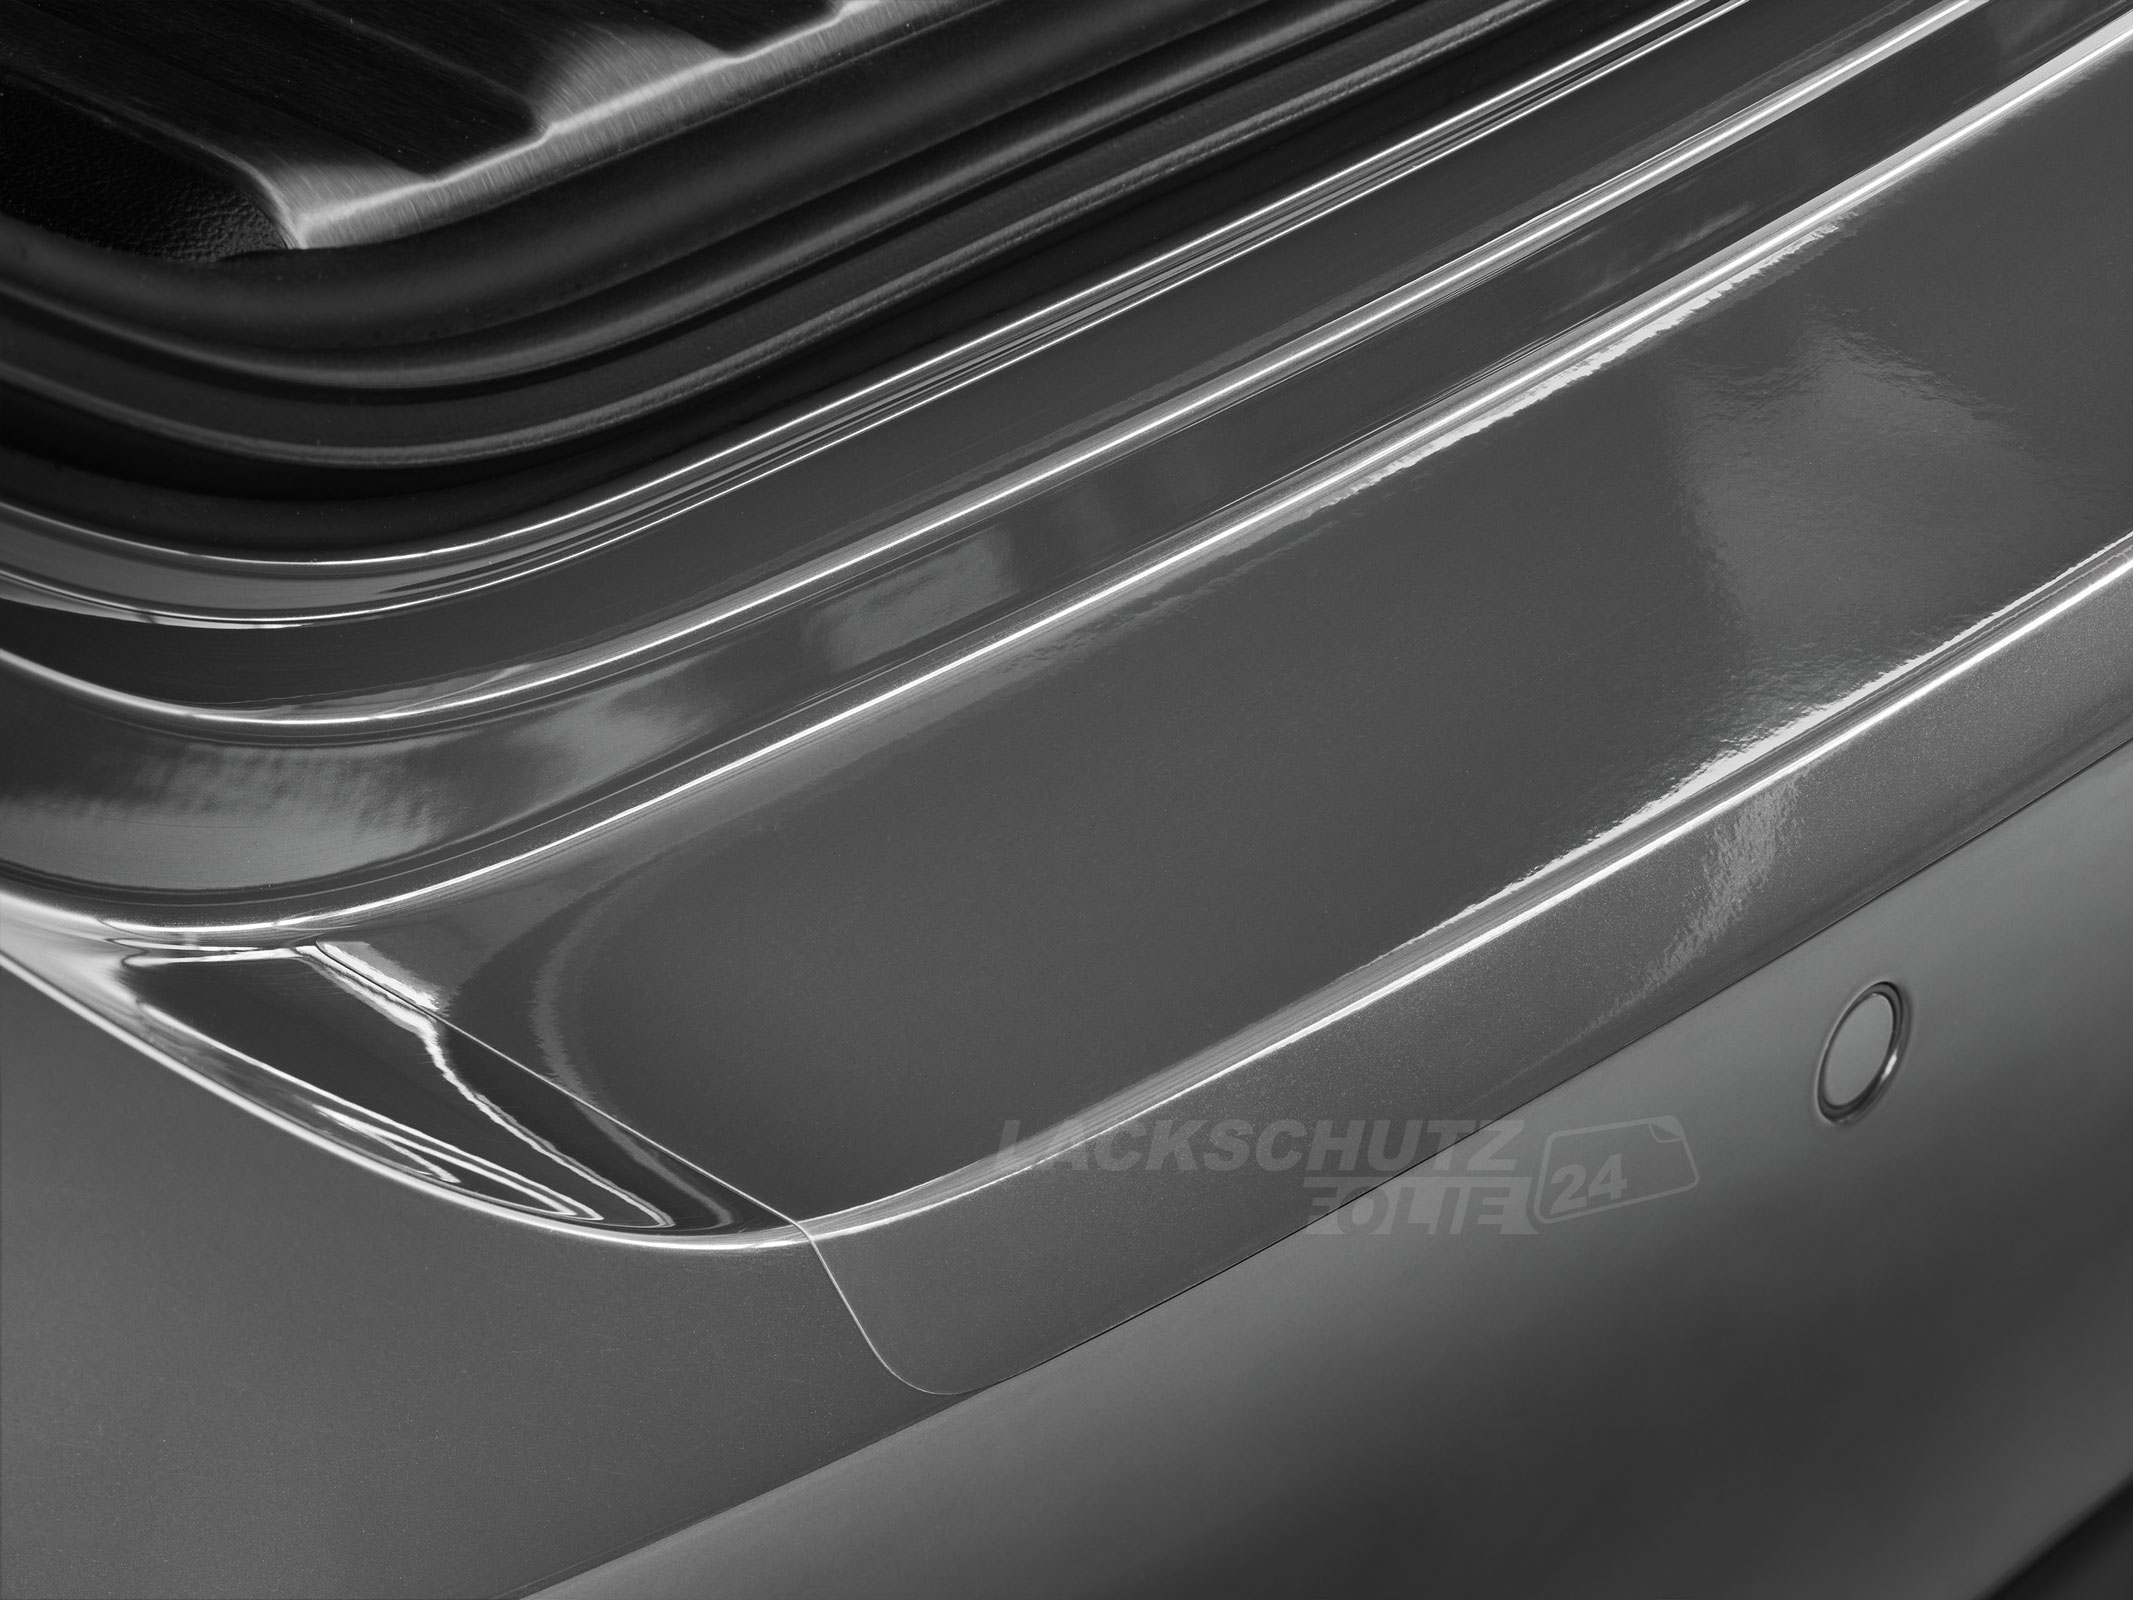 Ladekantenschutzfolie - Transparent Glatt Hochglänzend 240 µm stark für Audi A4 Cabrio B7, Typ 8E, BJ 2006-2009